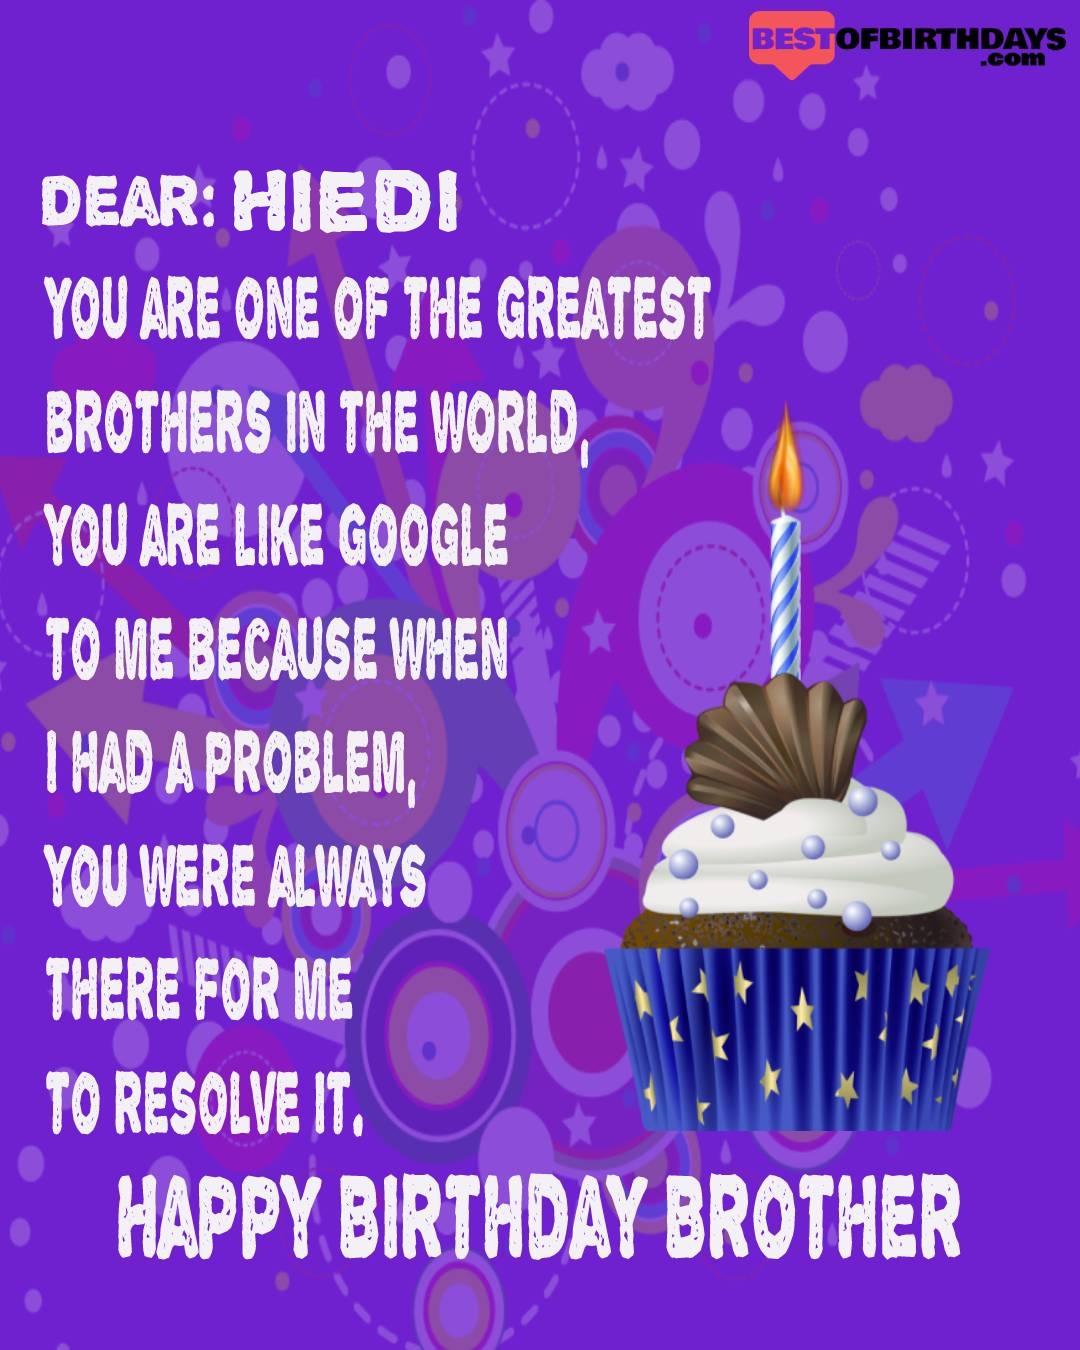 Happy birthday hiedi bhai brother bro